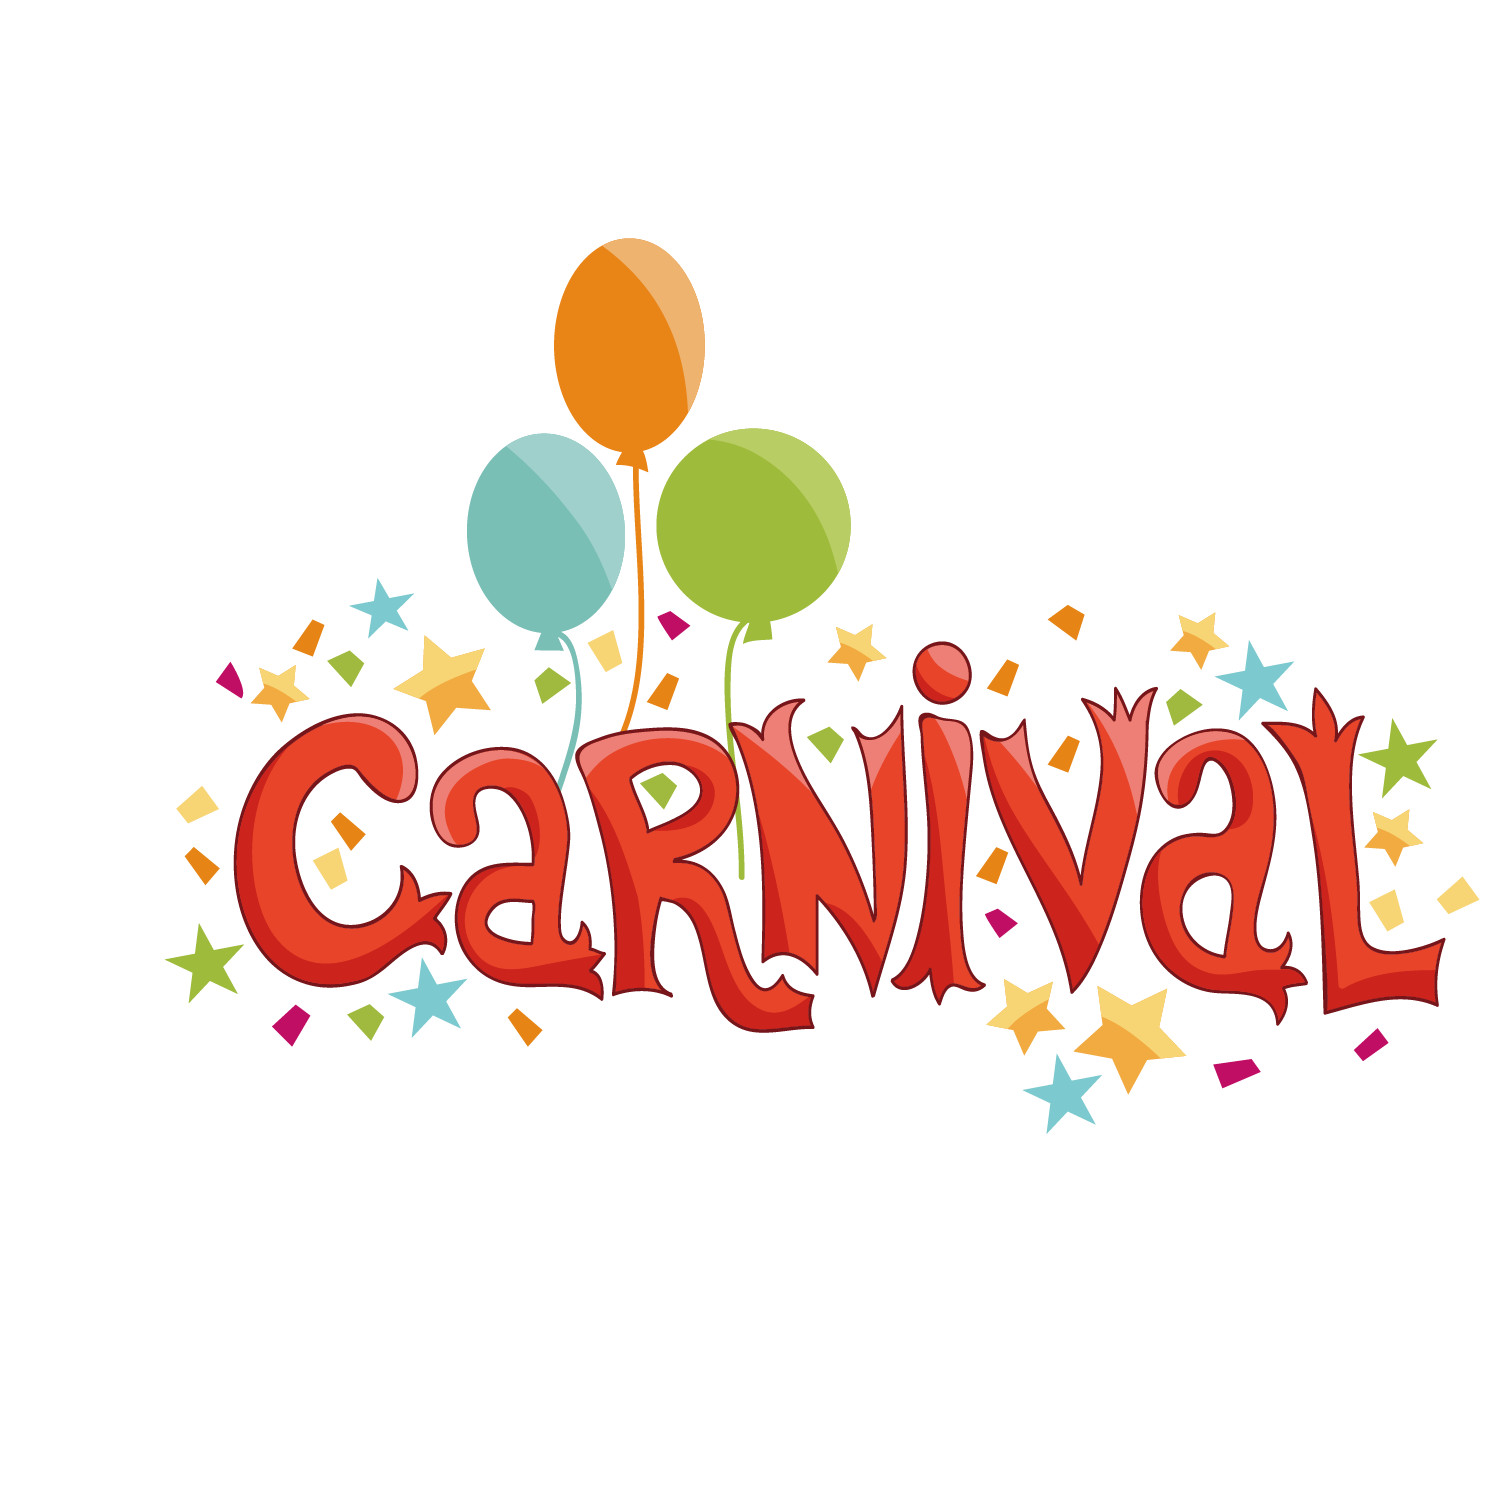 Carnival Logo Cliparts, Stock Vector and Royalty Free Carnival Logo  Illustrations